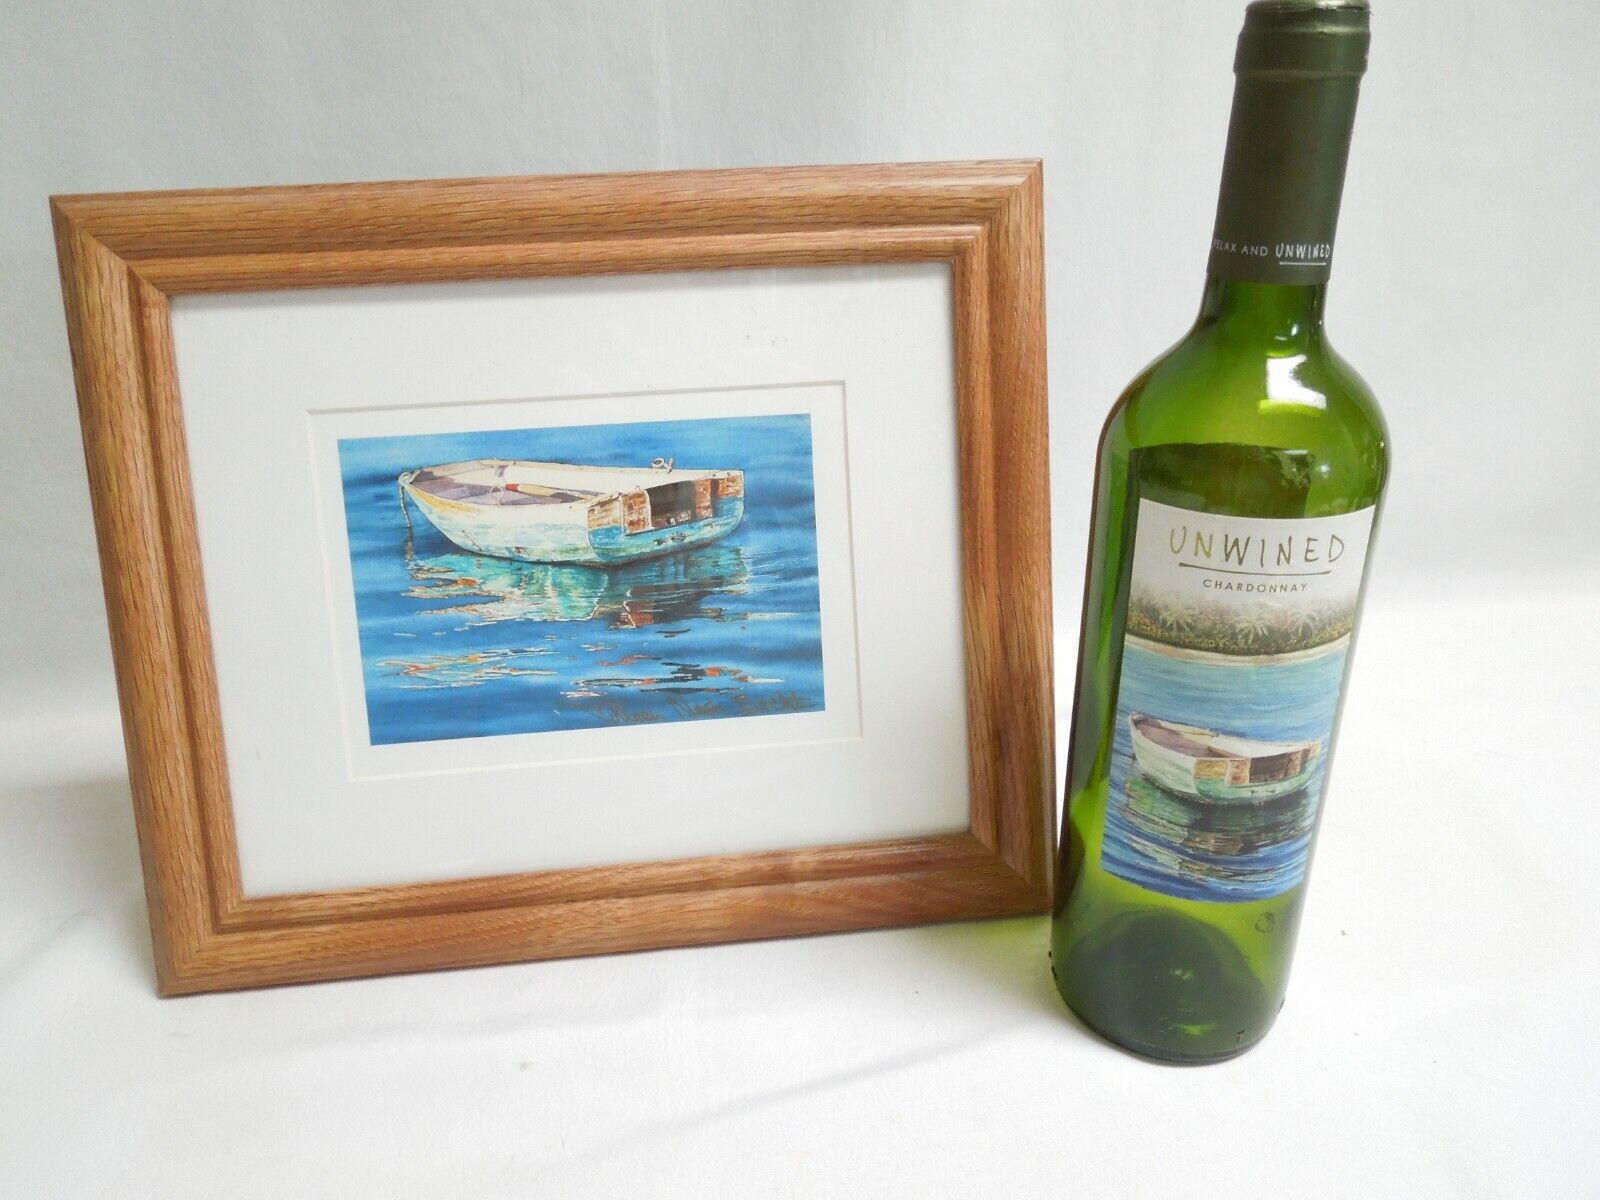 Abandoned Rowboat Signed Print in Wood & Glass Frame w/ Matching Unwined Bottle